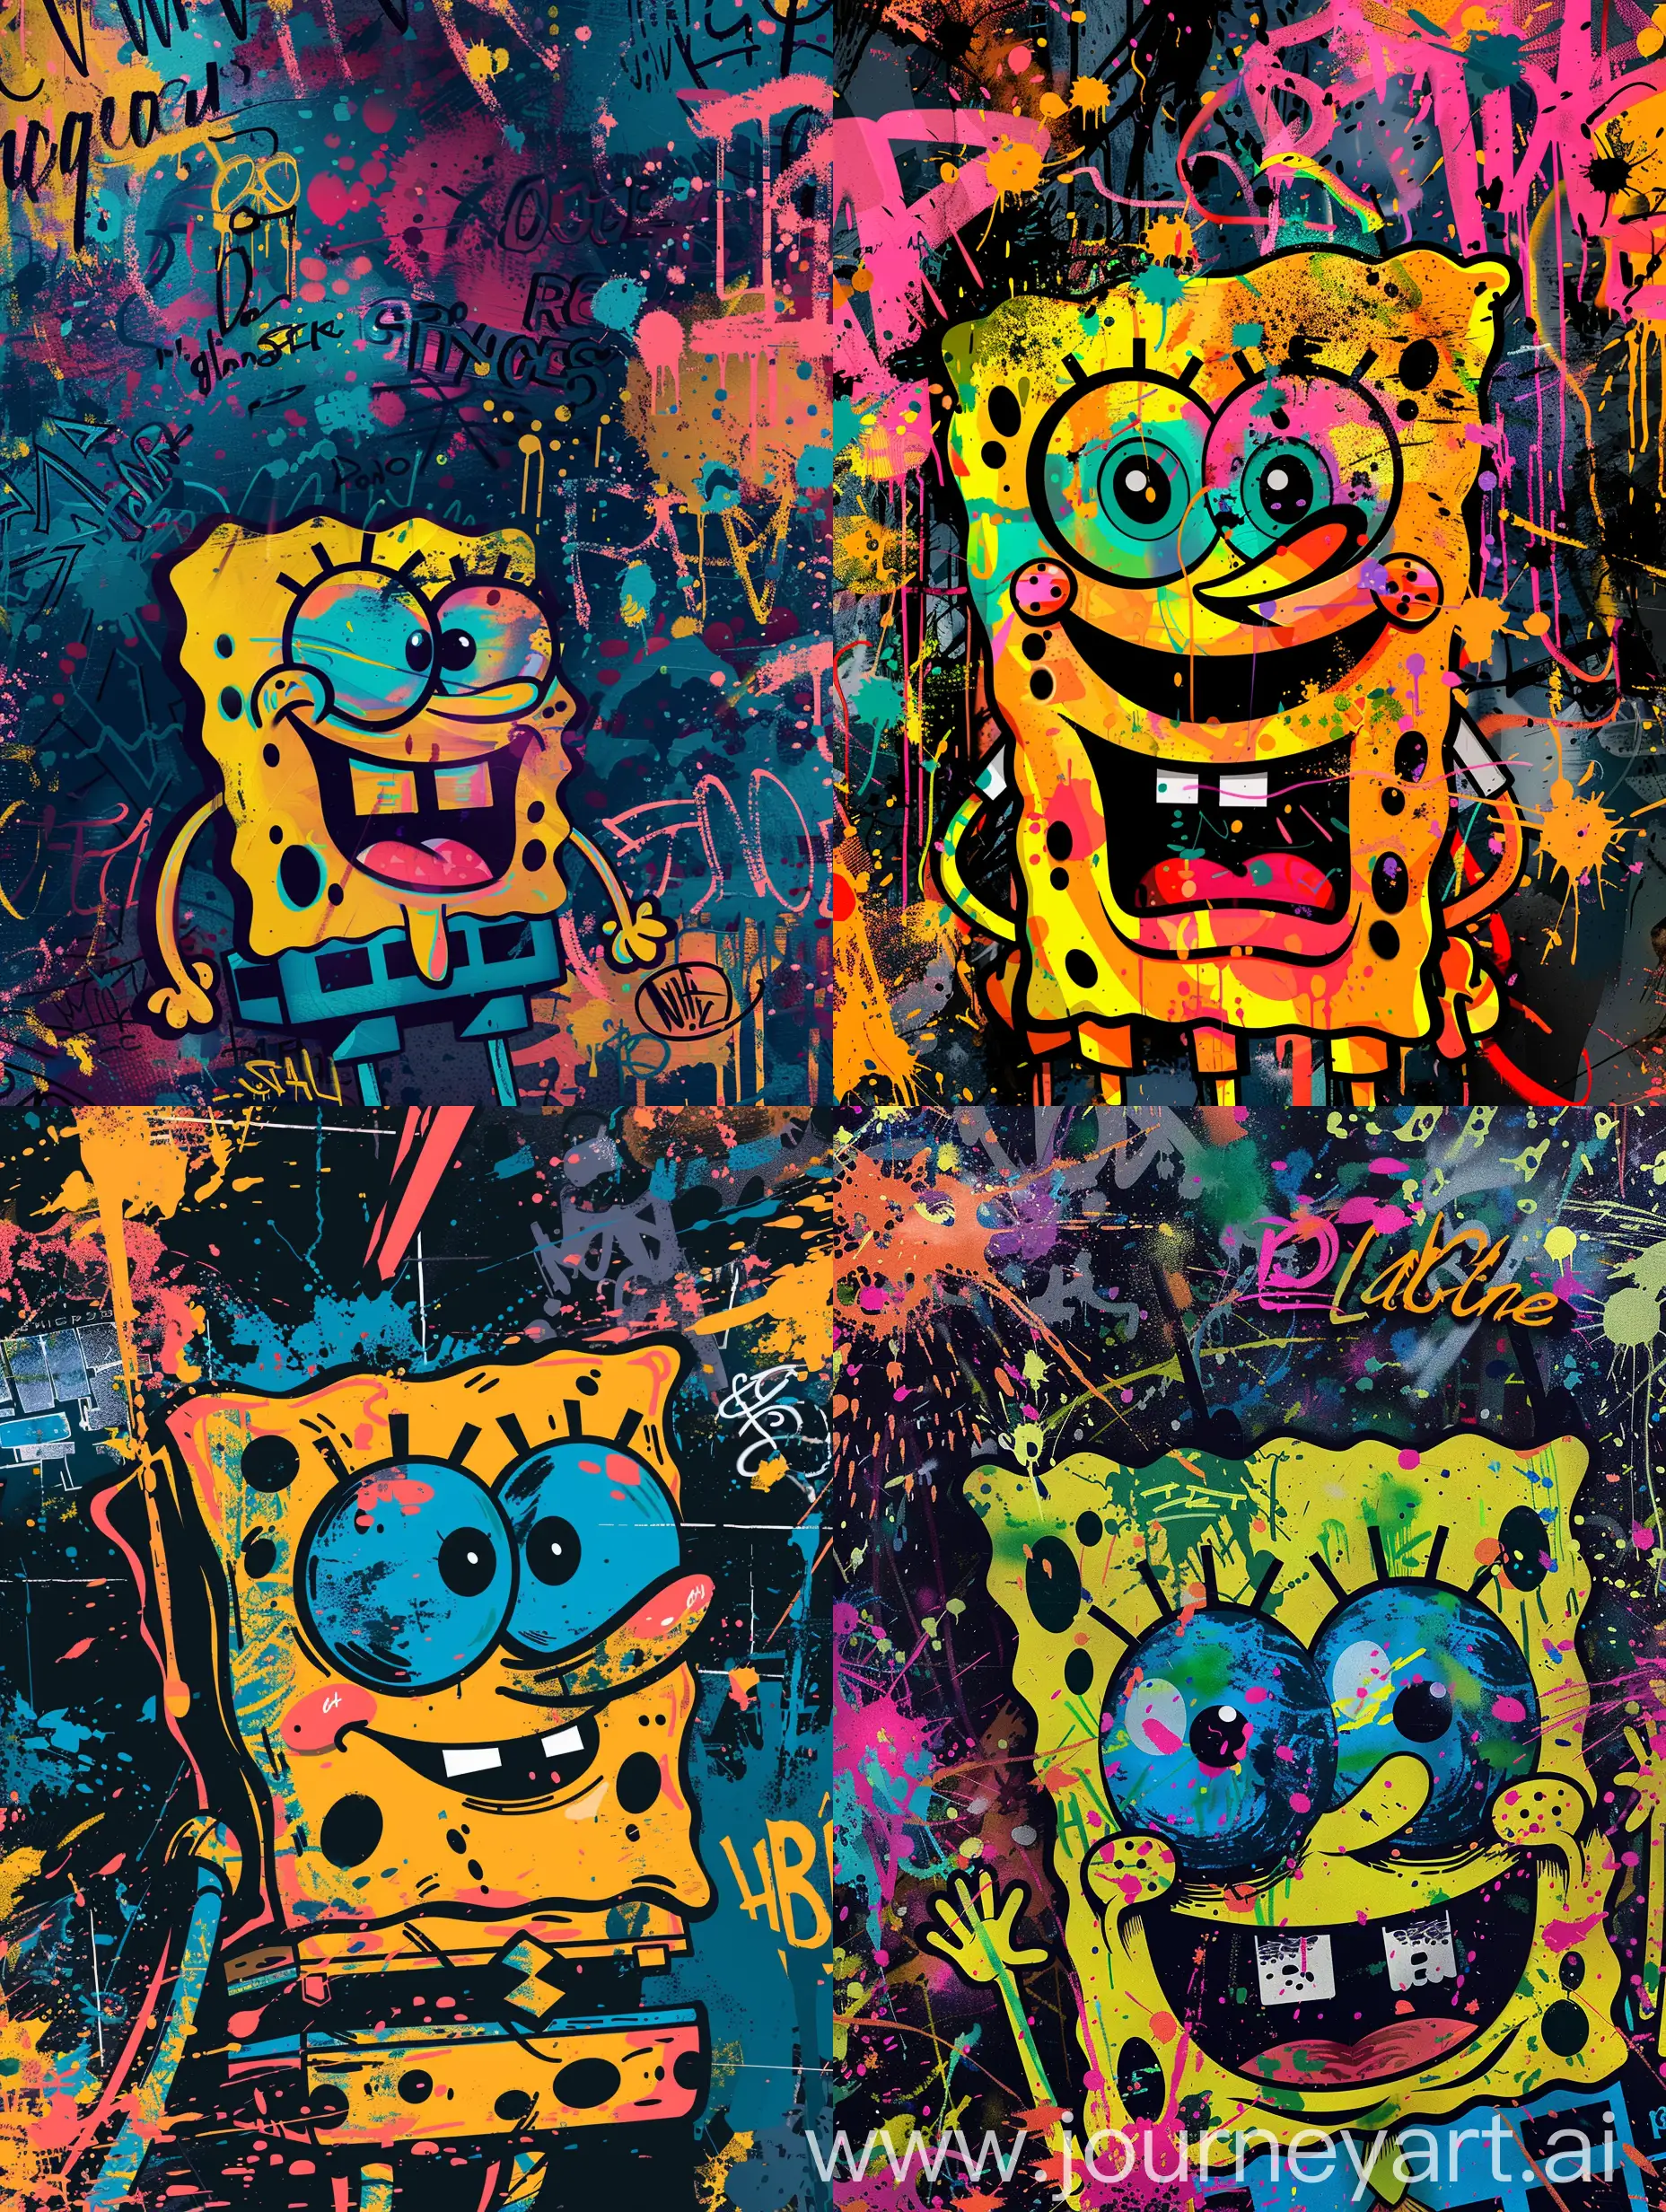 Fantasy-Illustration-of-SpongeBob-in-Vibrant-Urban-Graffiti-Setting